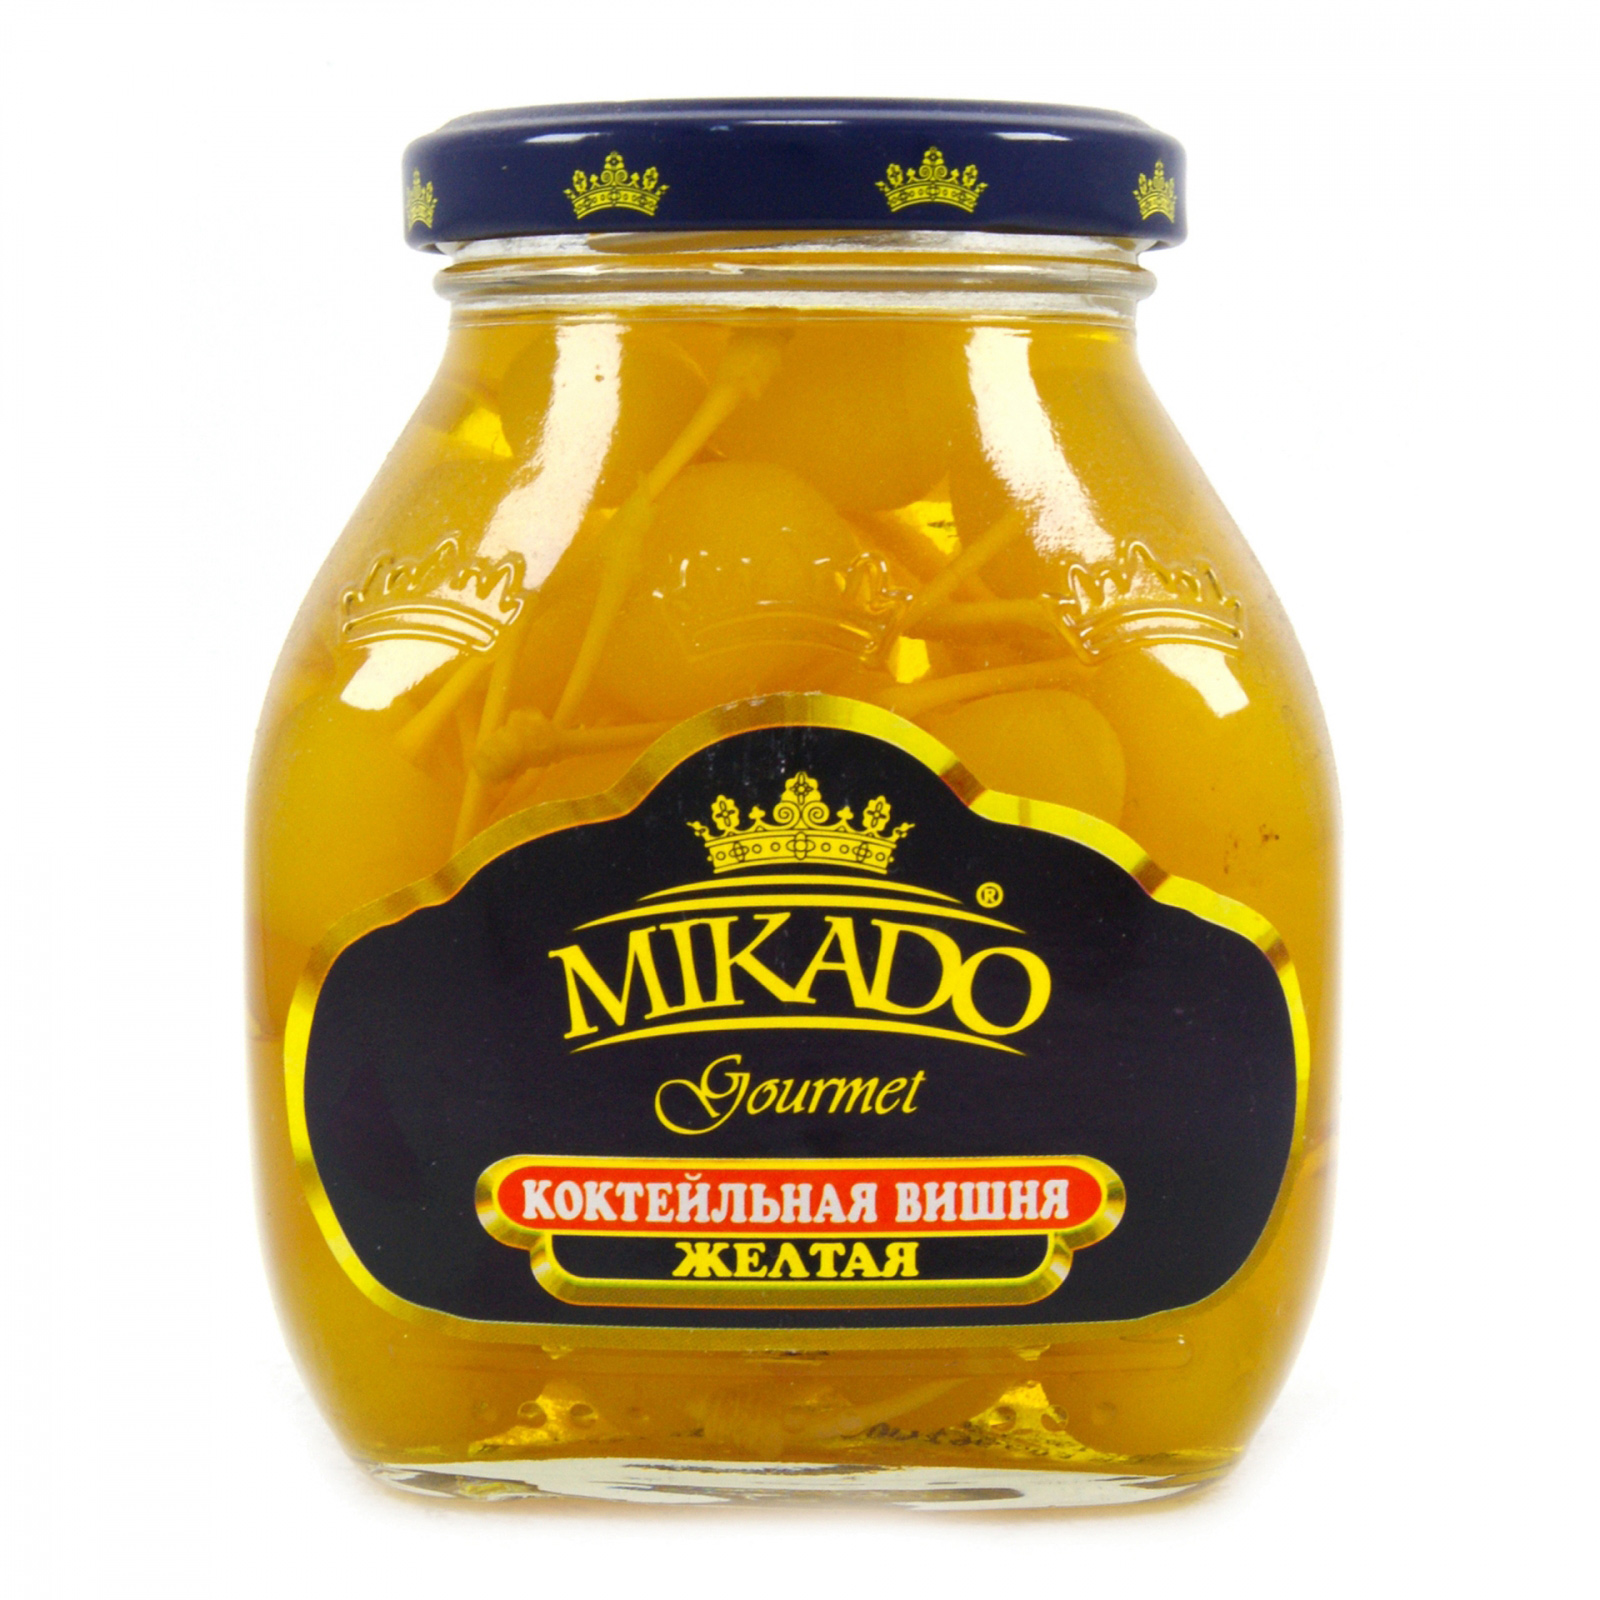 Вишня Mikado коктейльная желтая 255 г